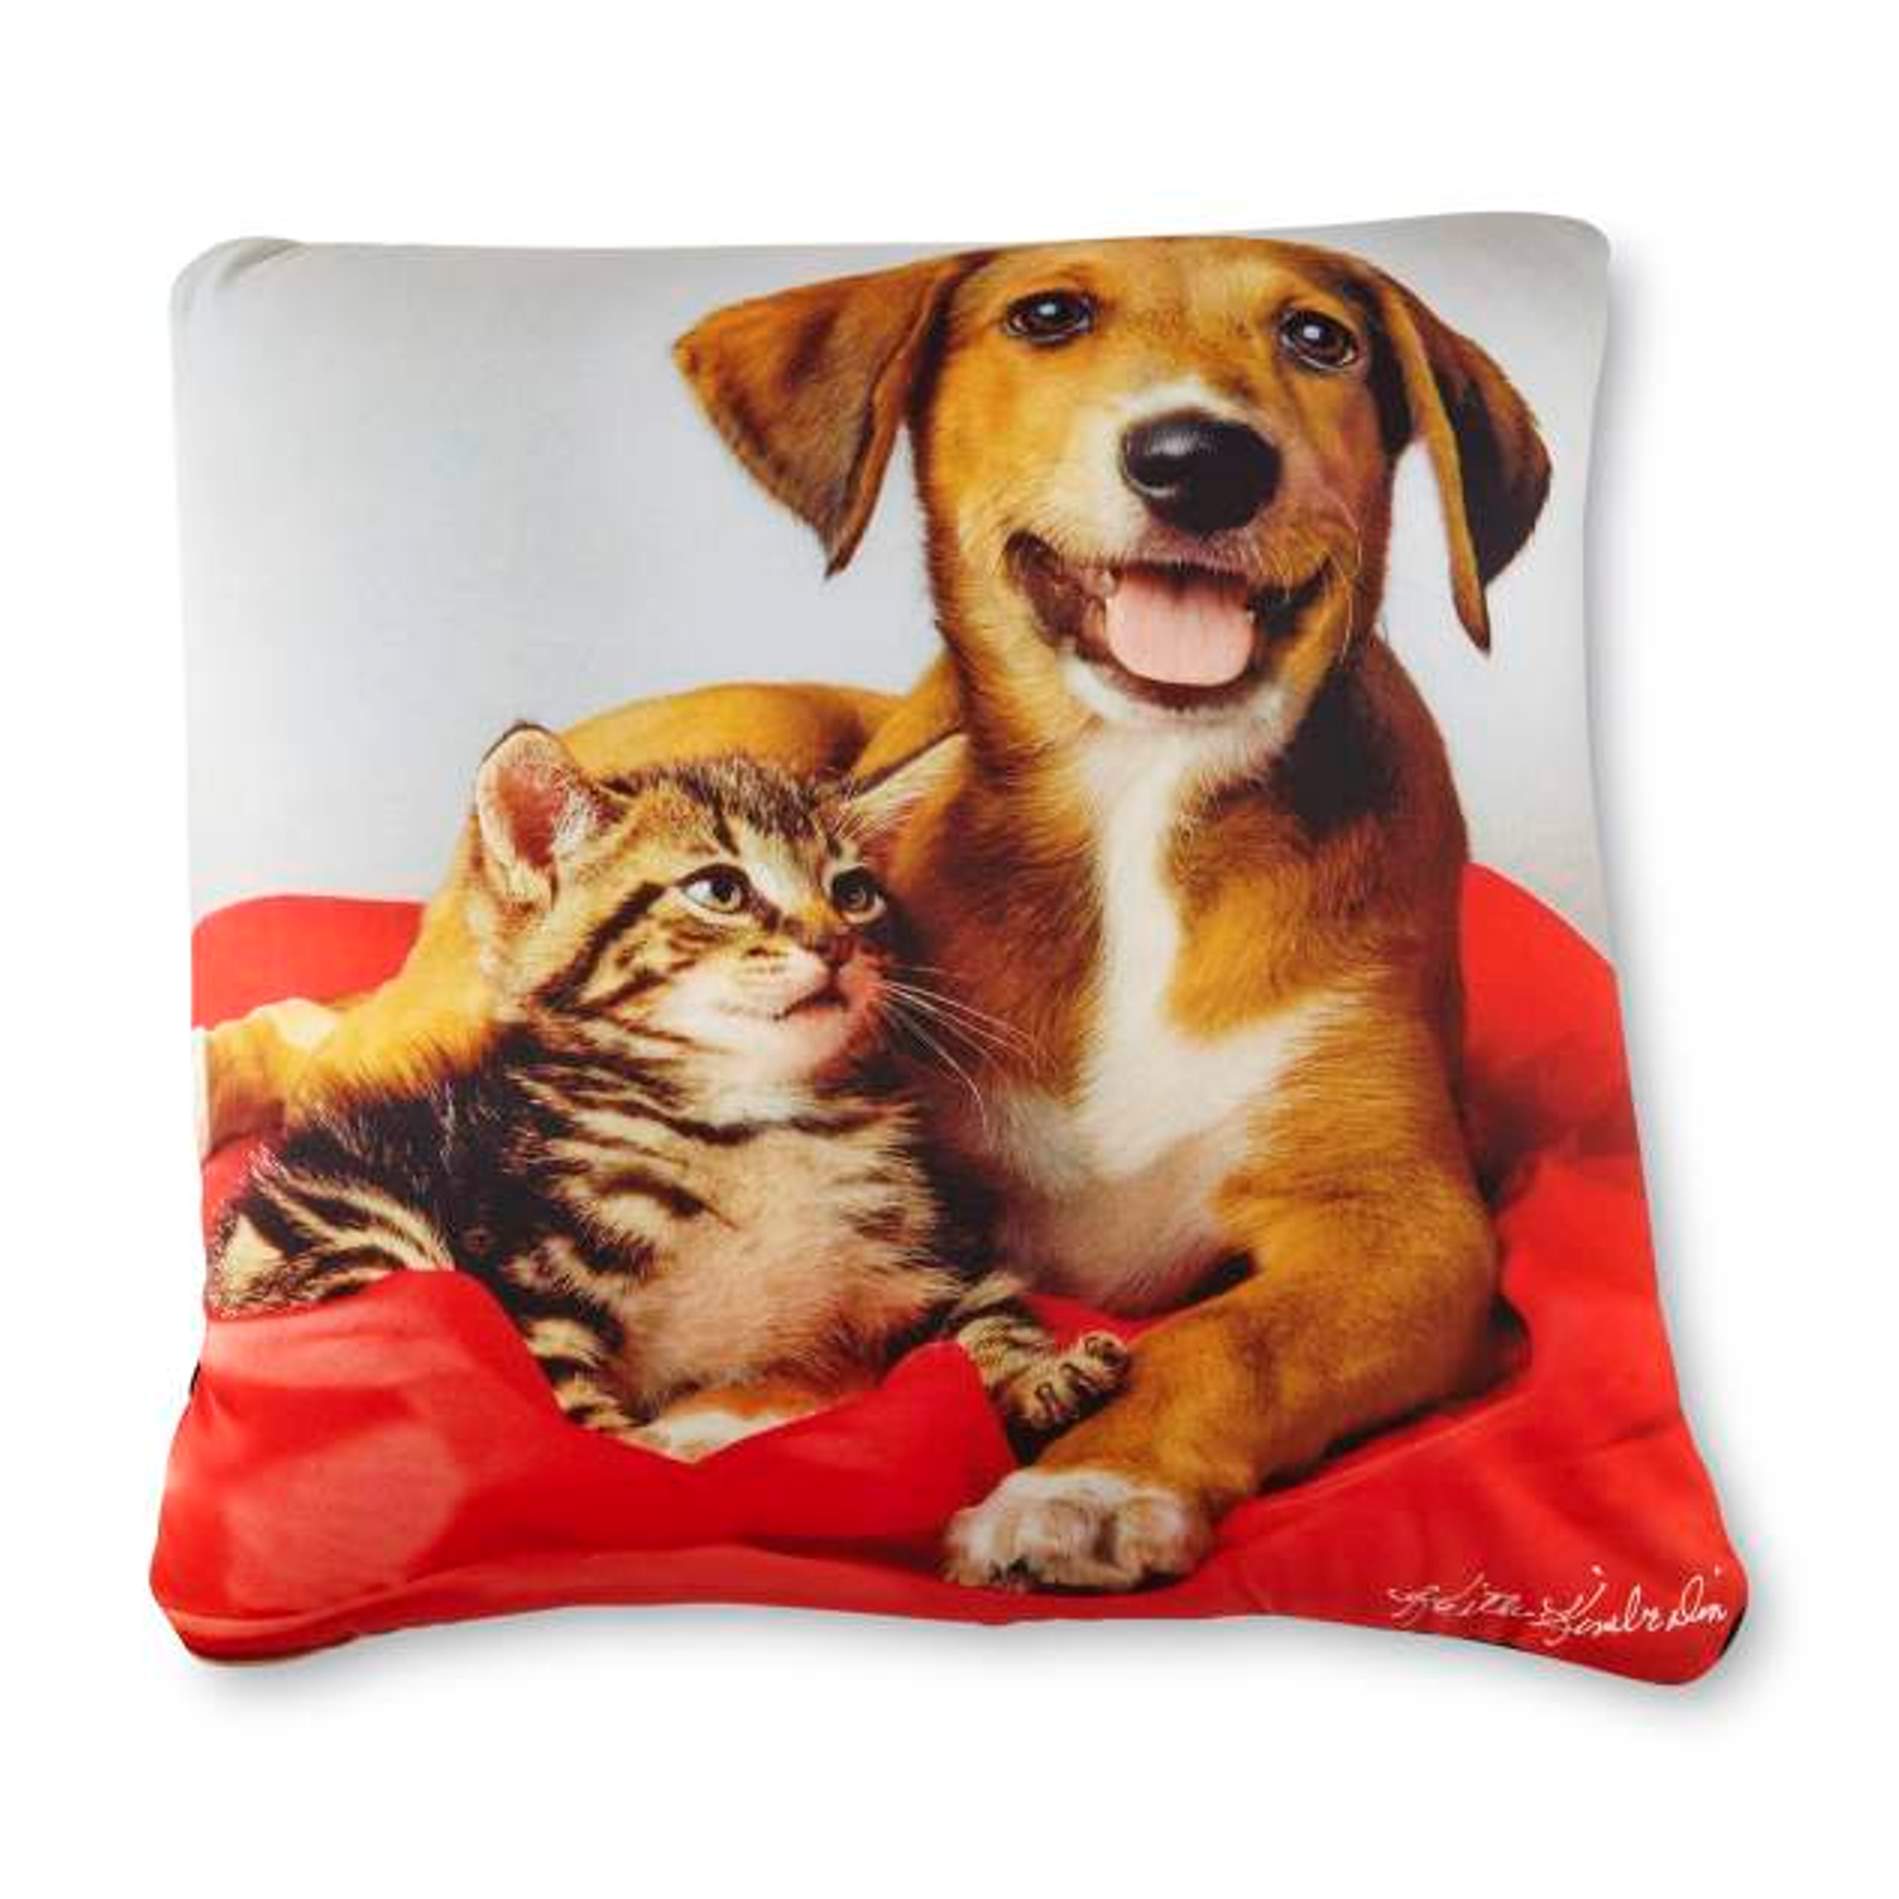 Keith Kimberlin Pillow - Animal Friends